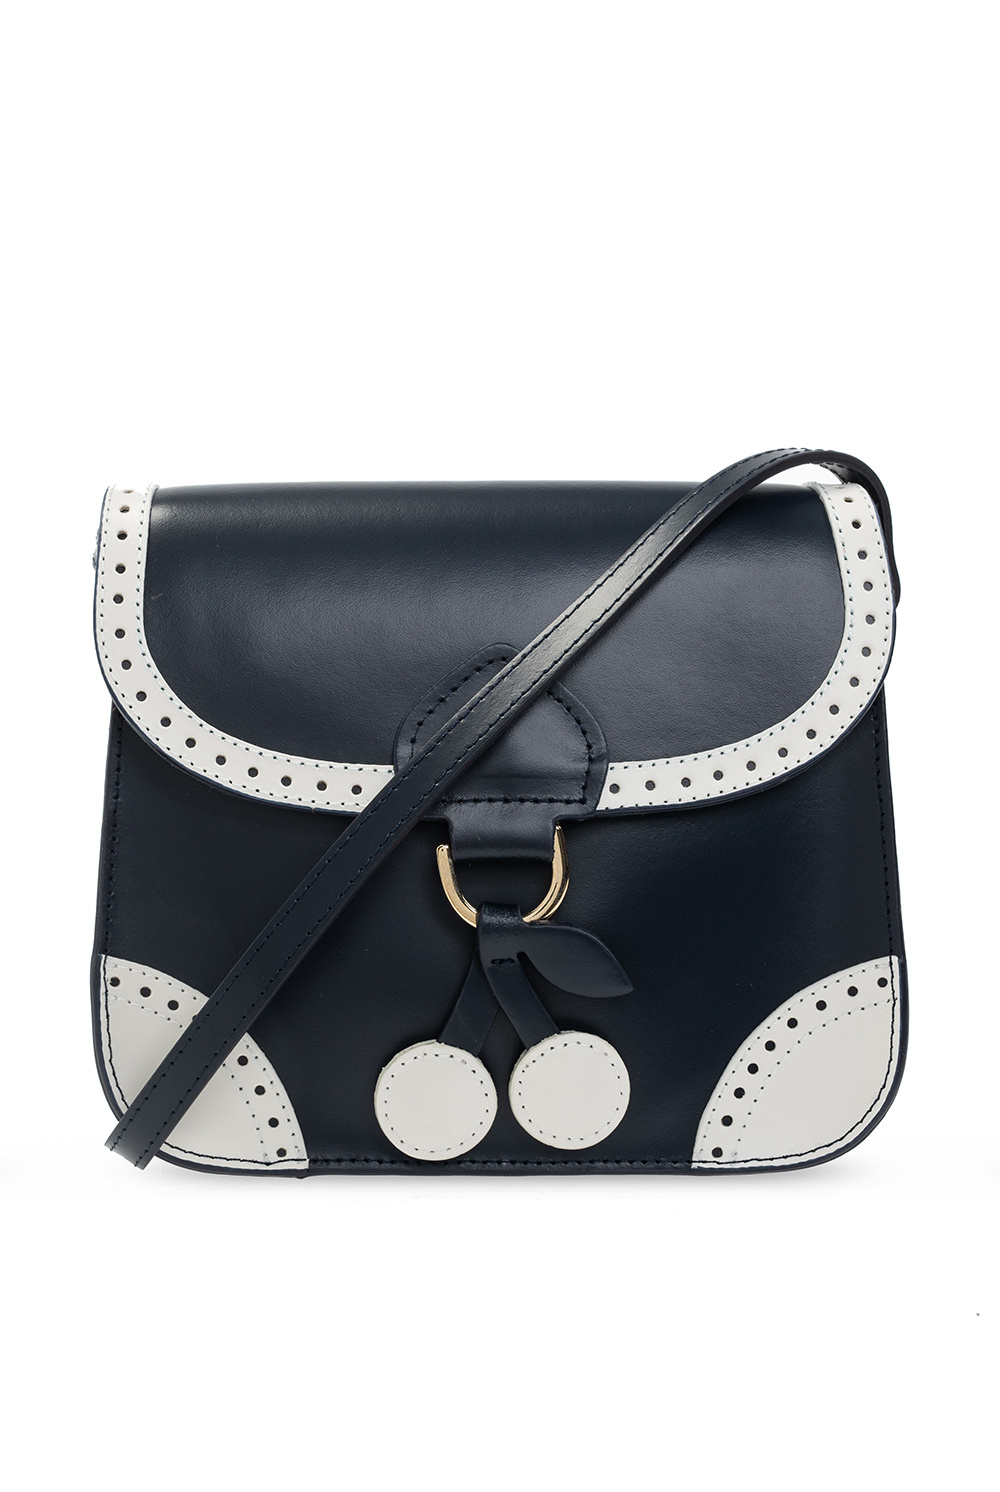 Chanel Cc Flap Bag Black - 414 For Sale on 1stDibs